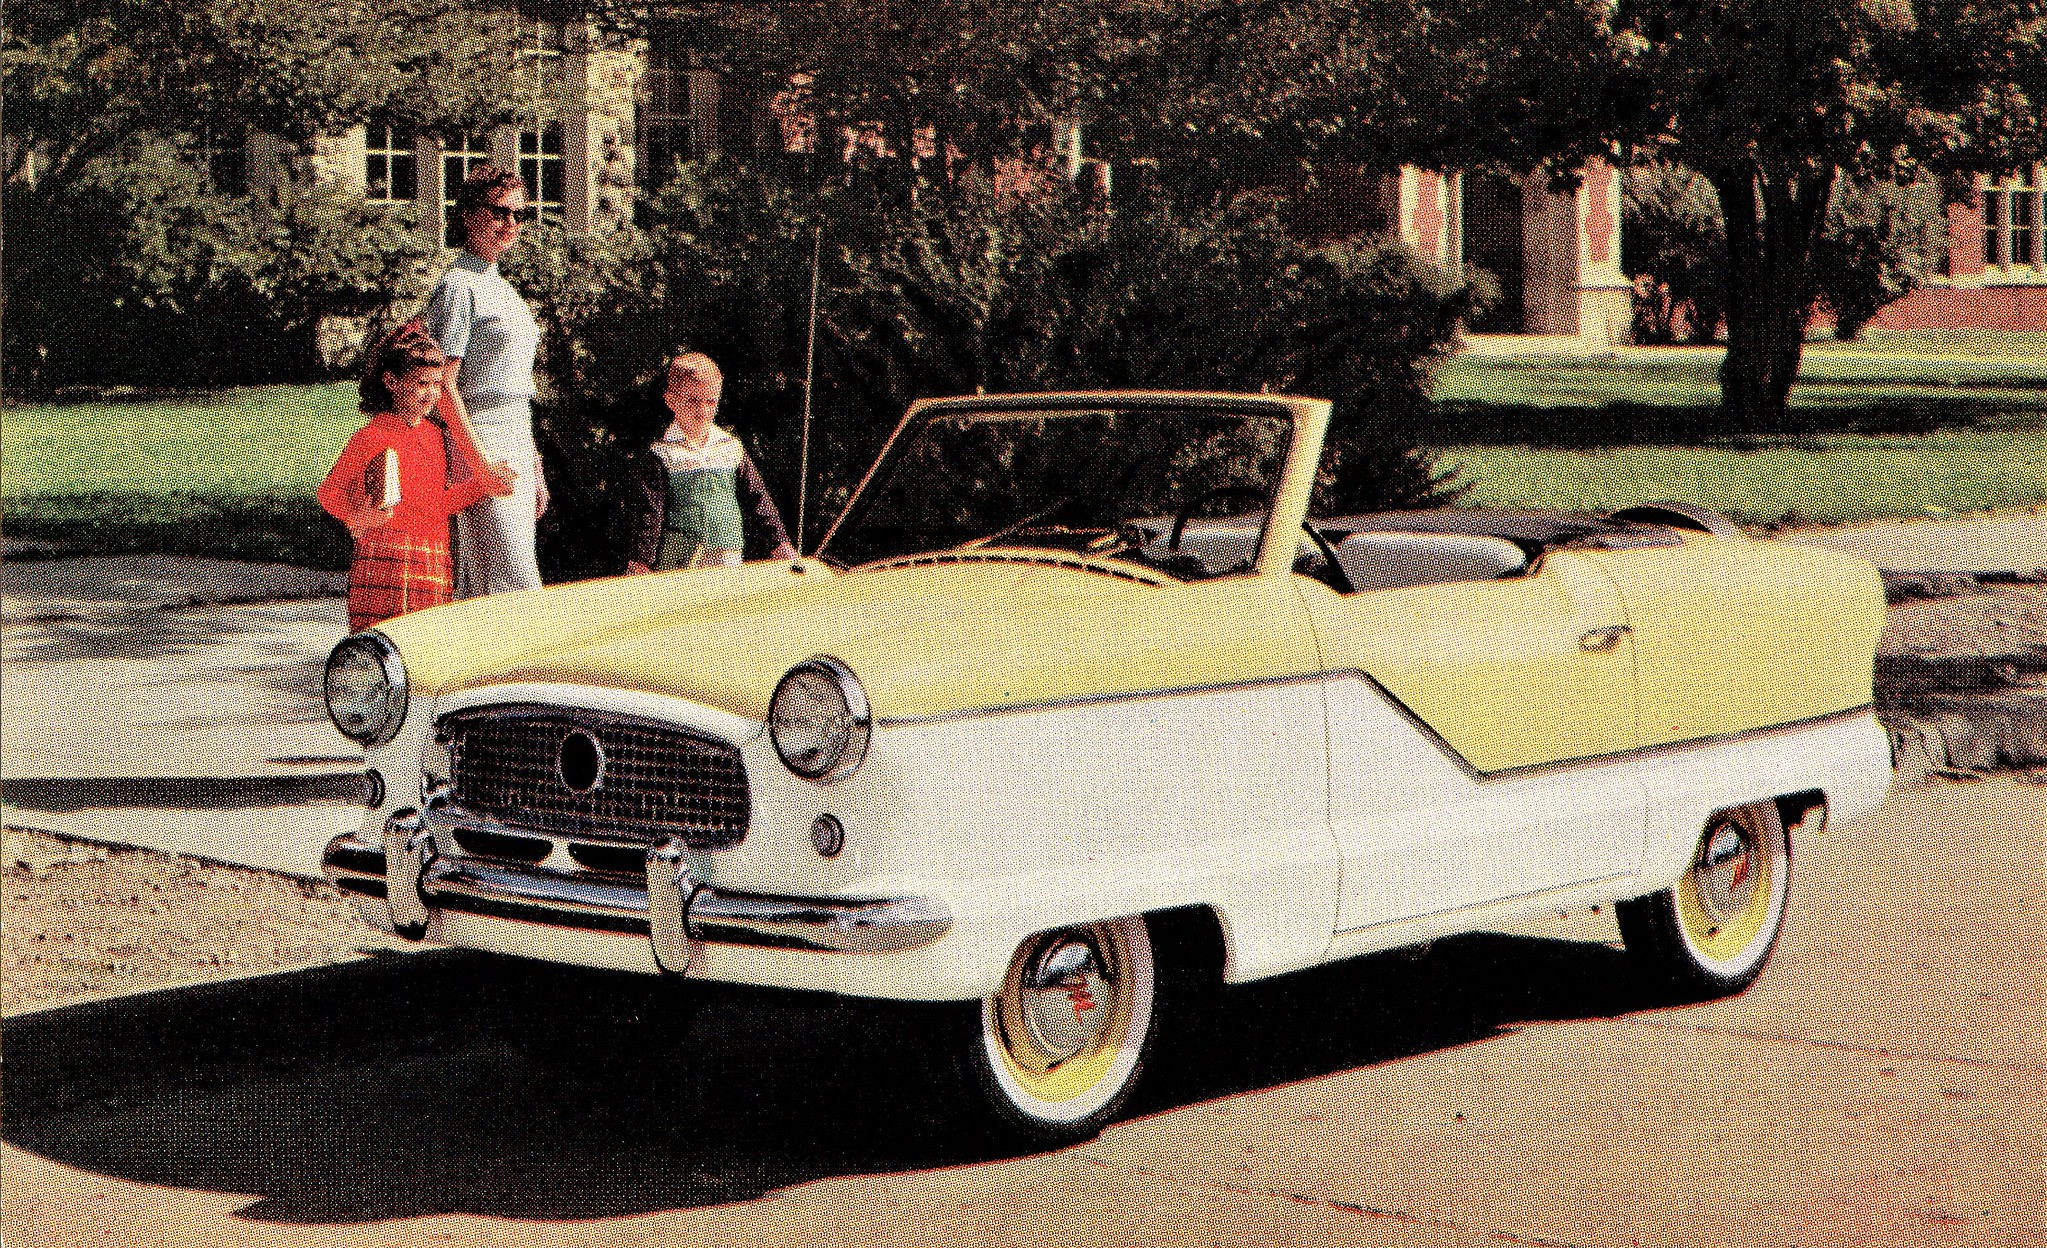 January 14, 1954 – Nash & Hudson merge to form AMC